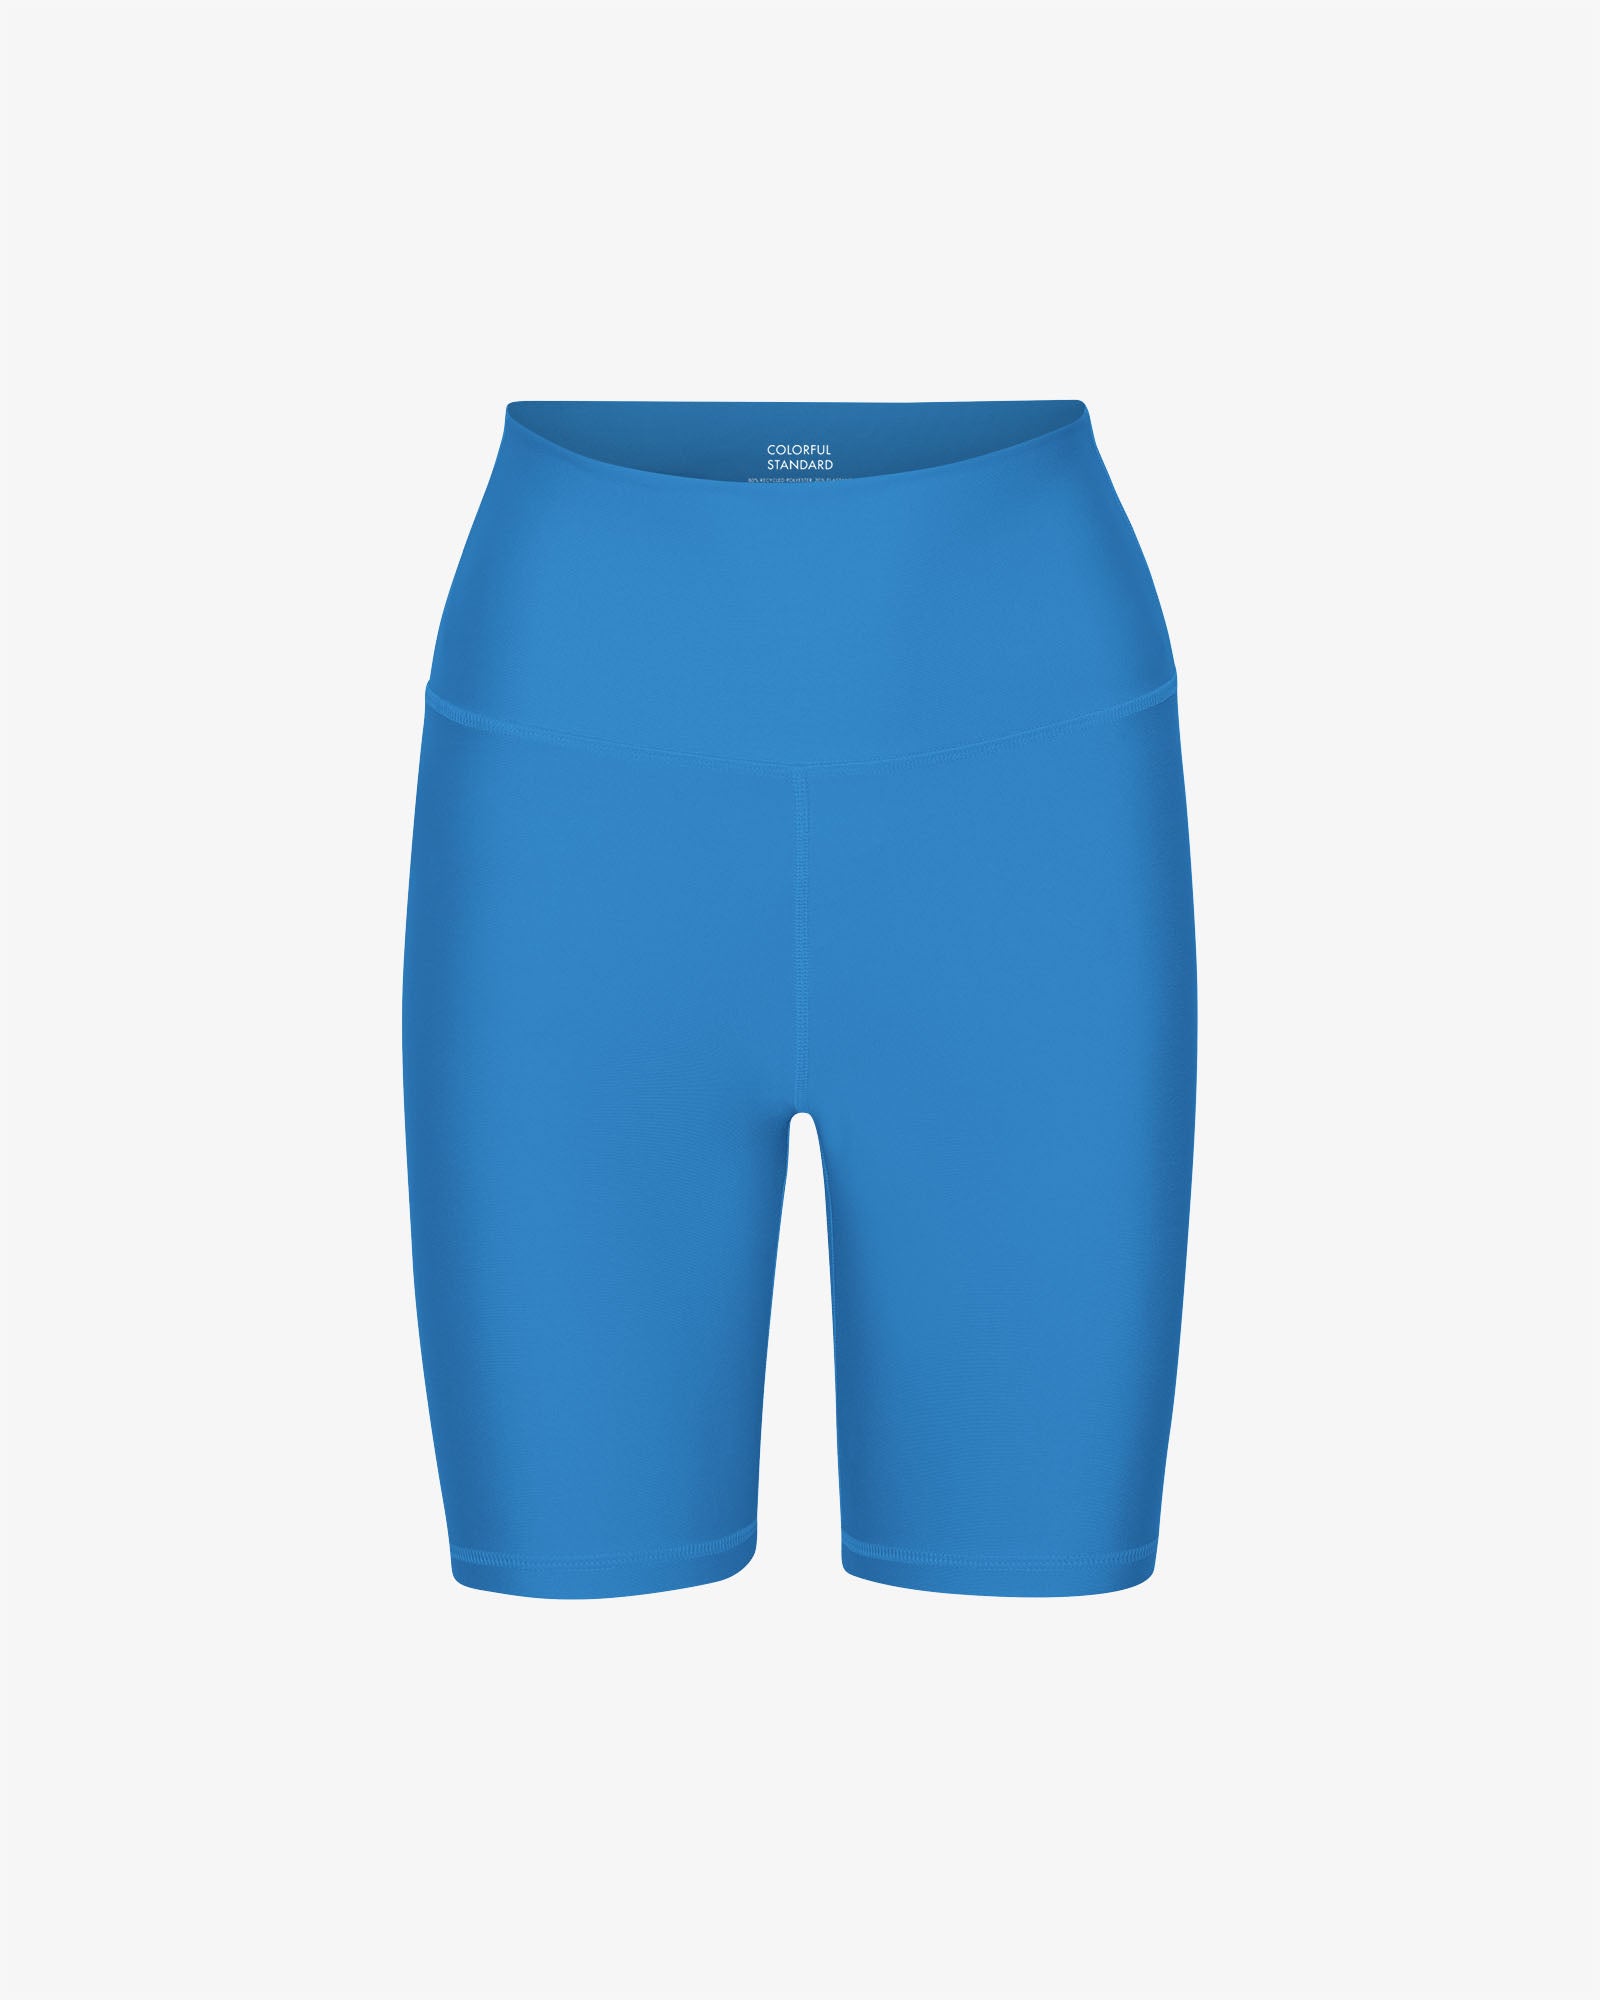 Active Bike Shorts - Pacific Blue